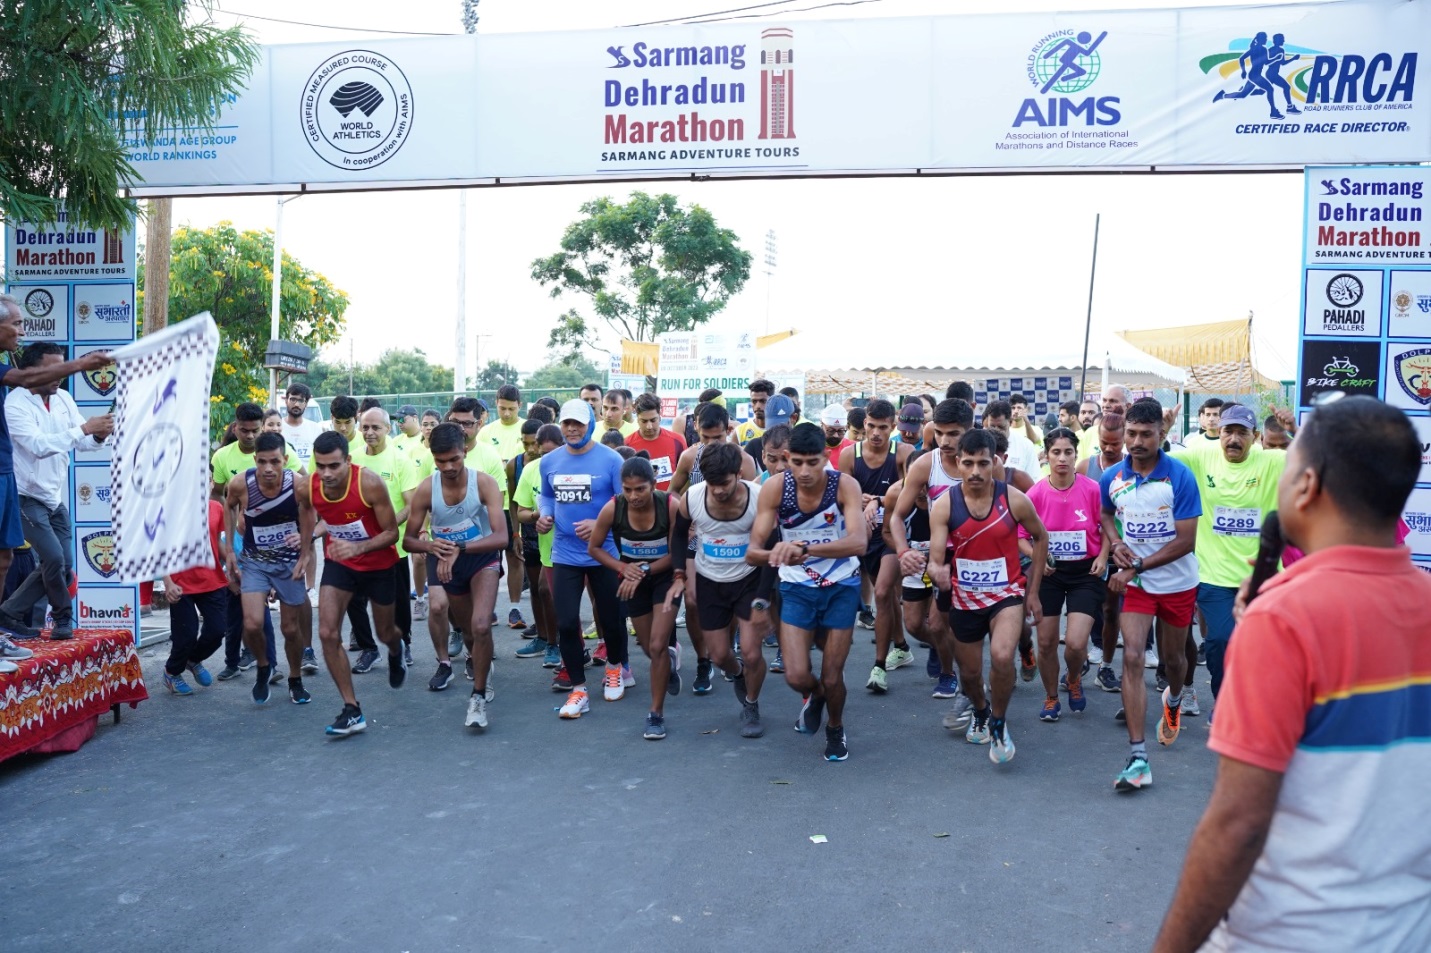 Sarmang Dehradun Marathon Opens Registrations for Third Edition